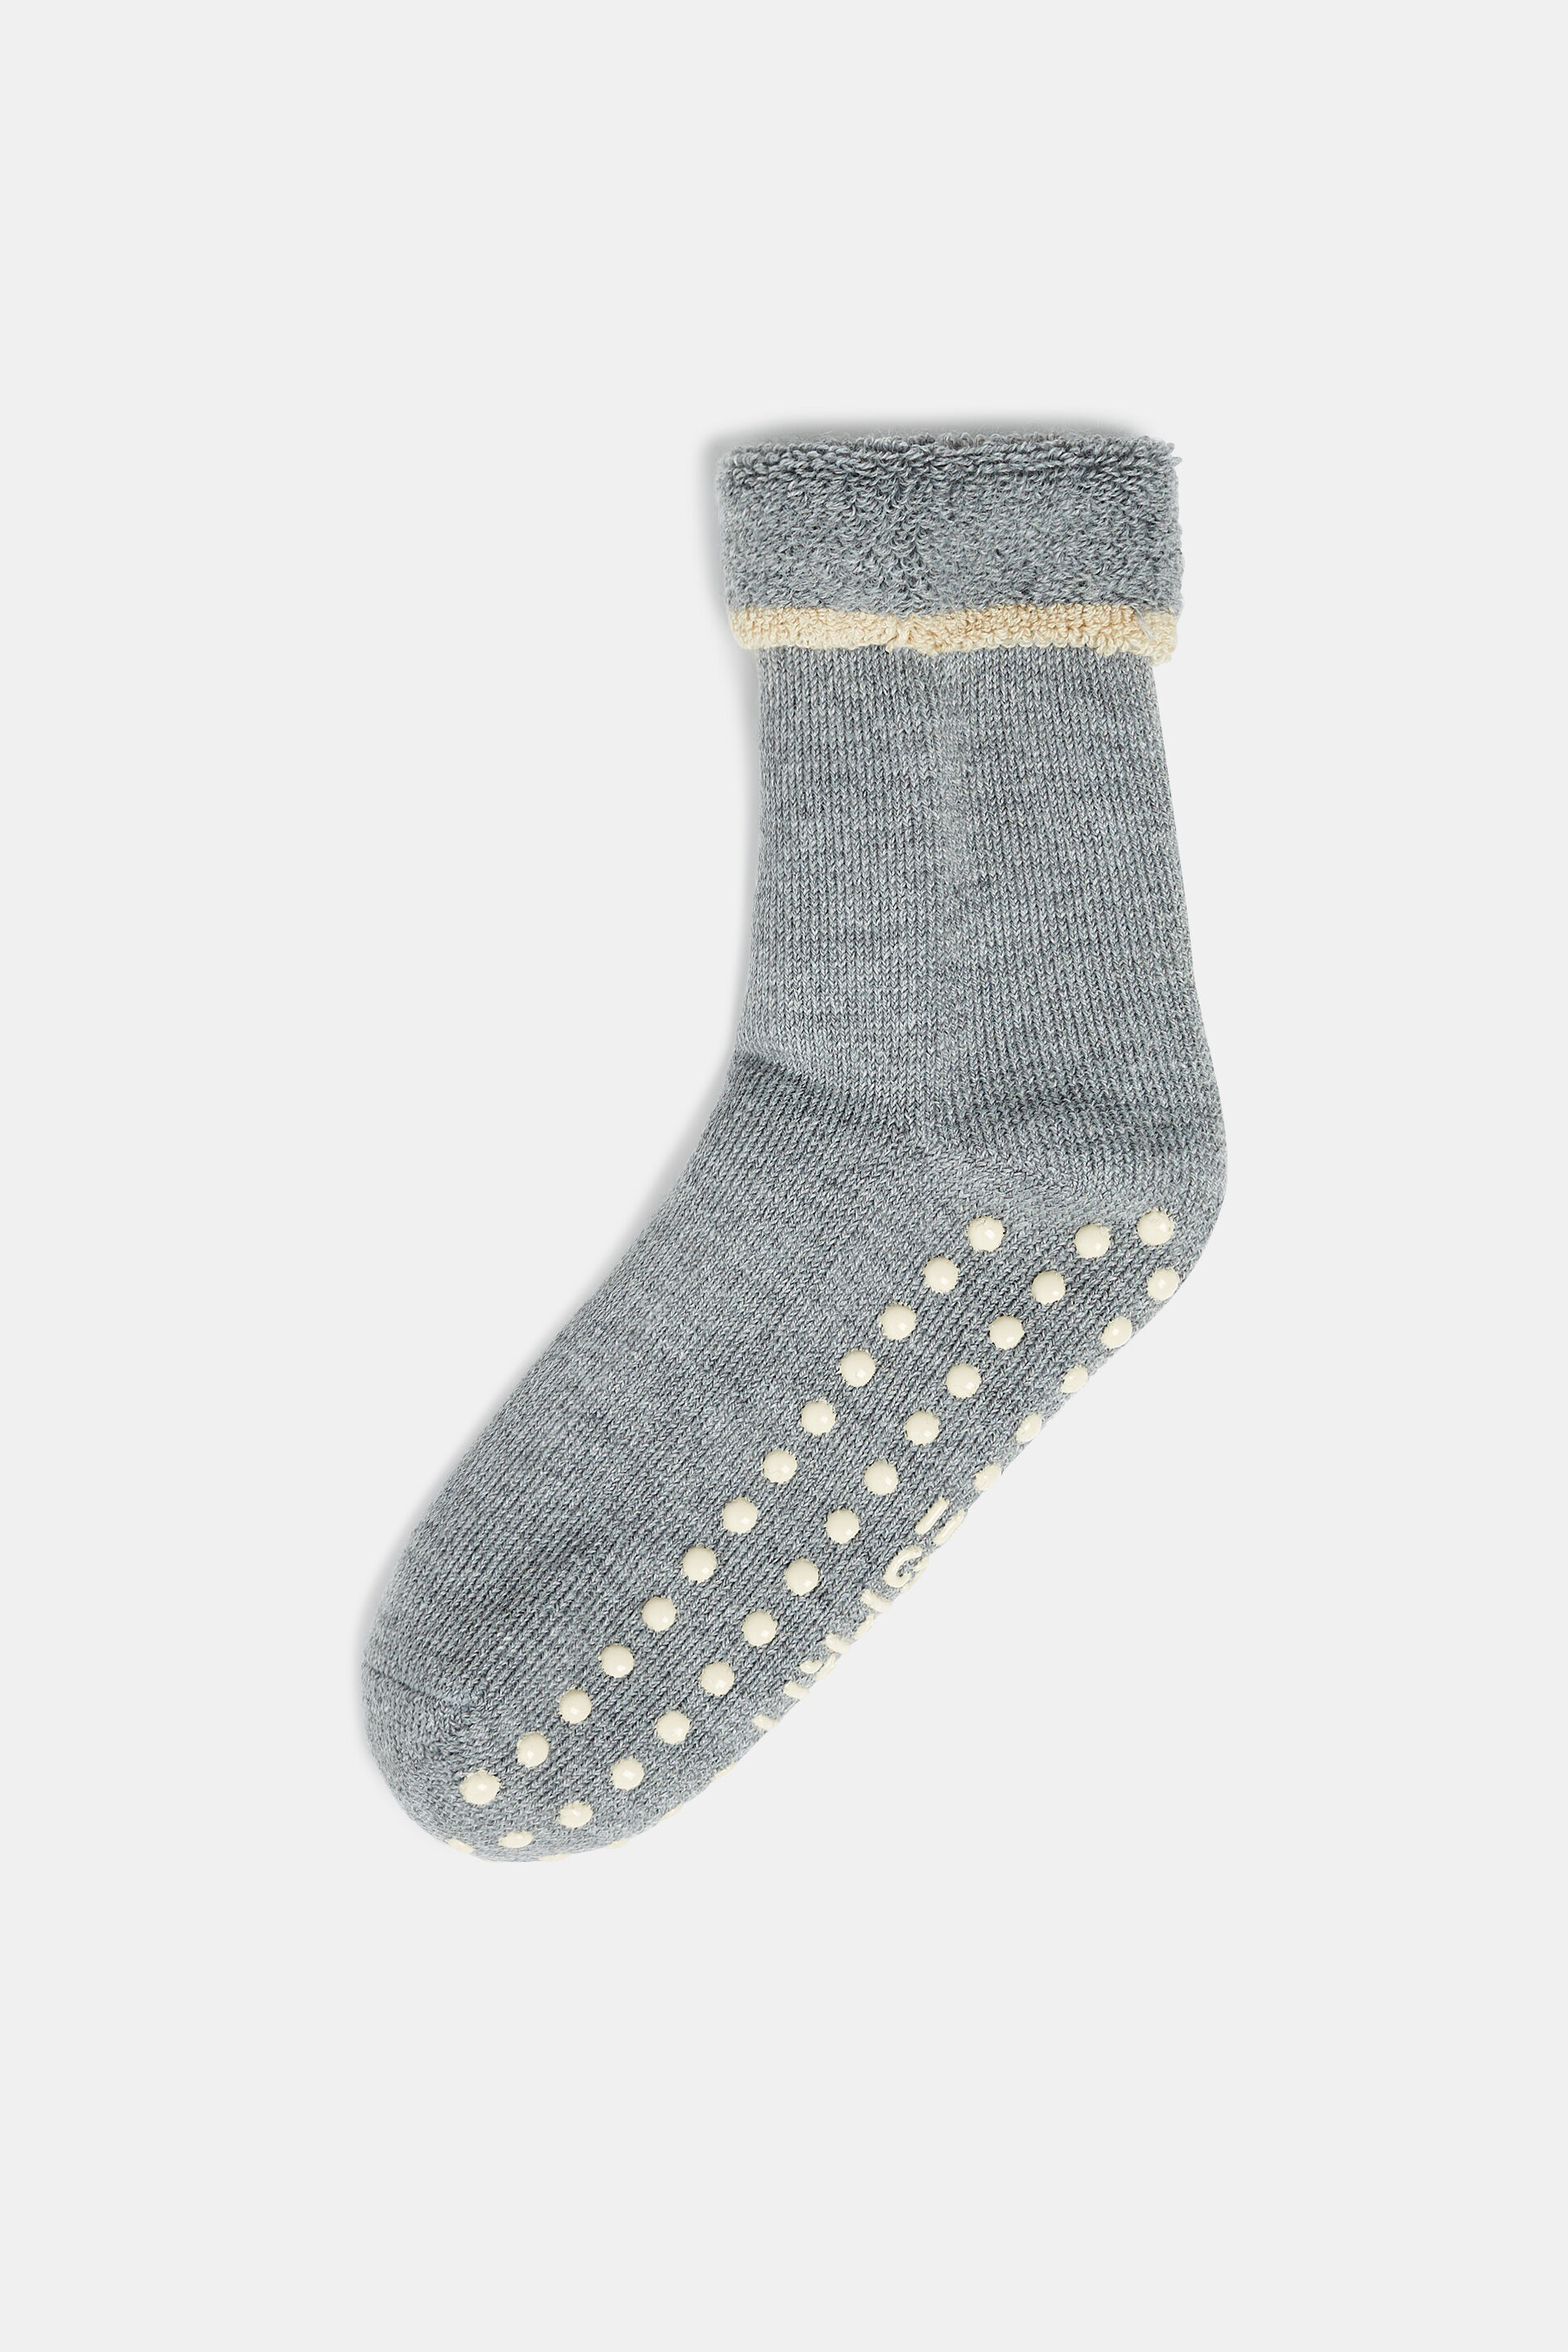 Esprit wool blend socks, Soft stopper